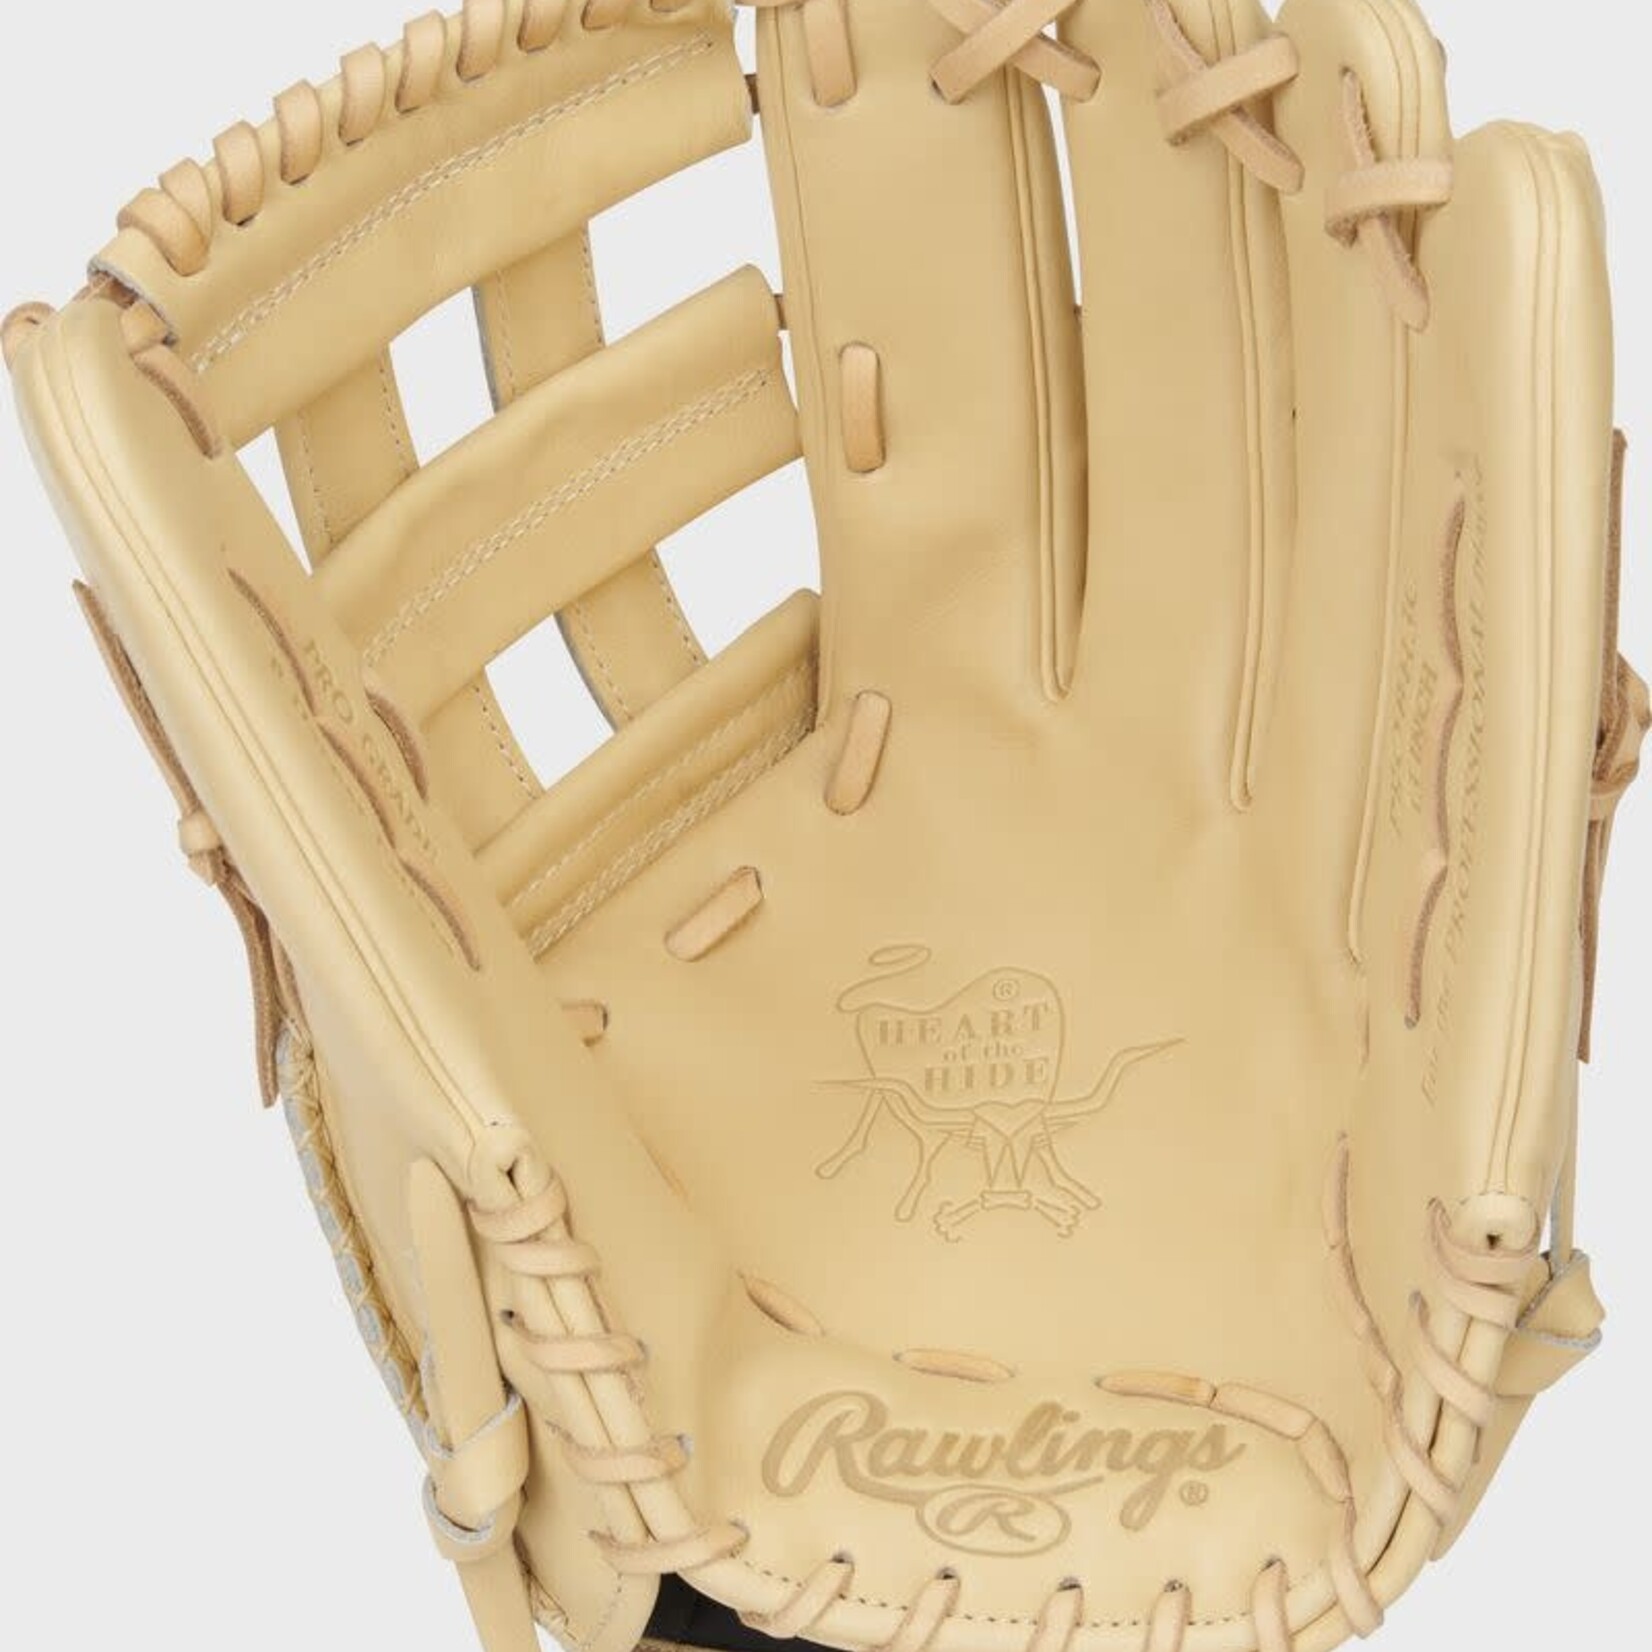 Rawlings Rawlings Baseball Glove, Heart of the Hide PROBH3C, Bryce Harper Pattern, 13”, Reg